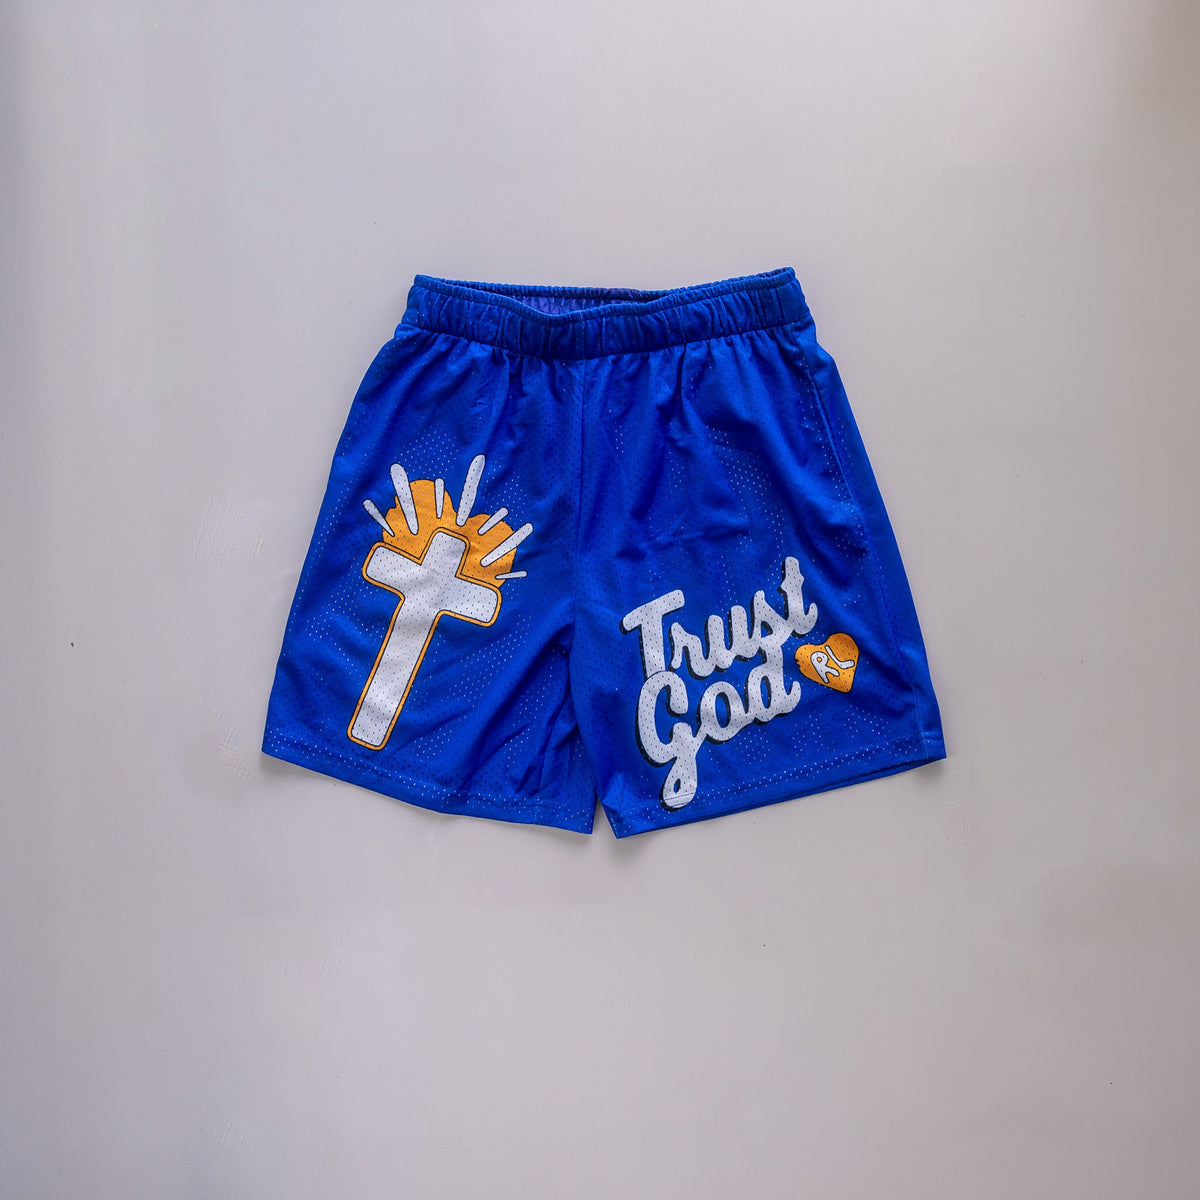 Trust God Mesh Shorts - Royal Blue - RED LETTERS